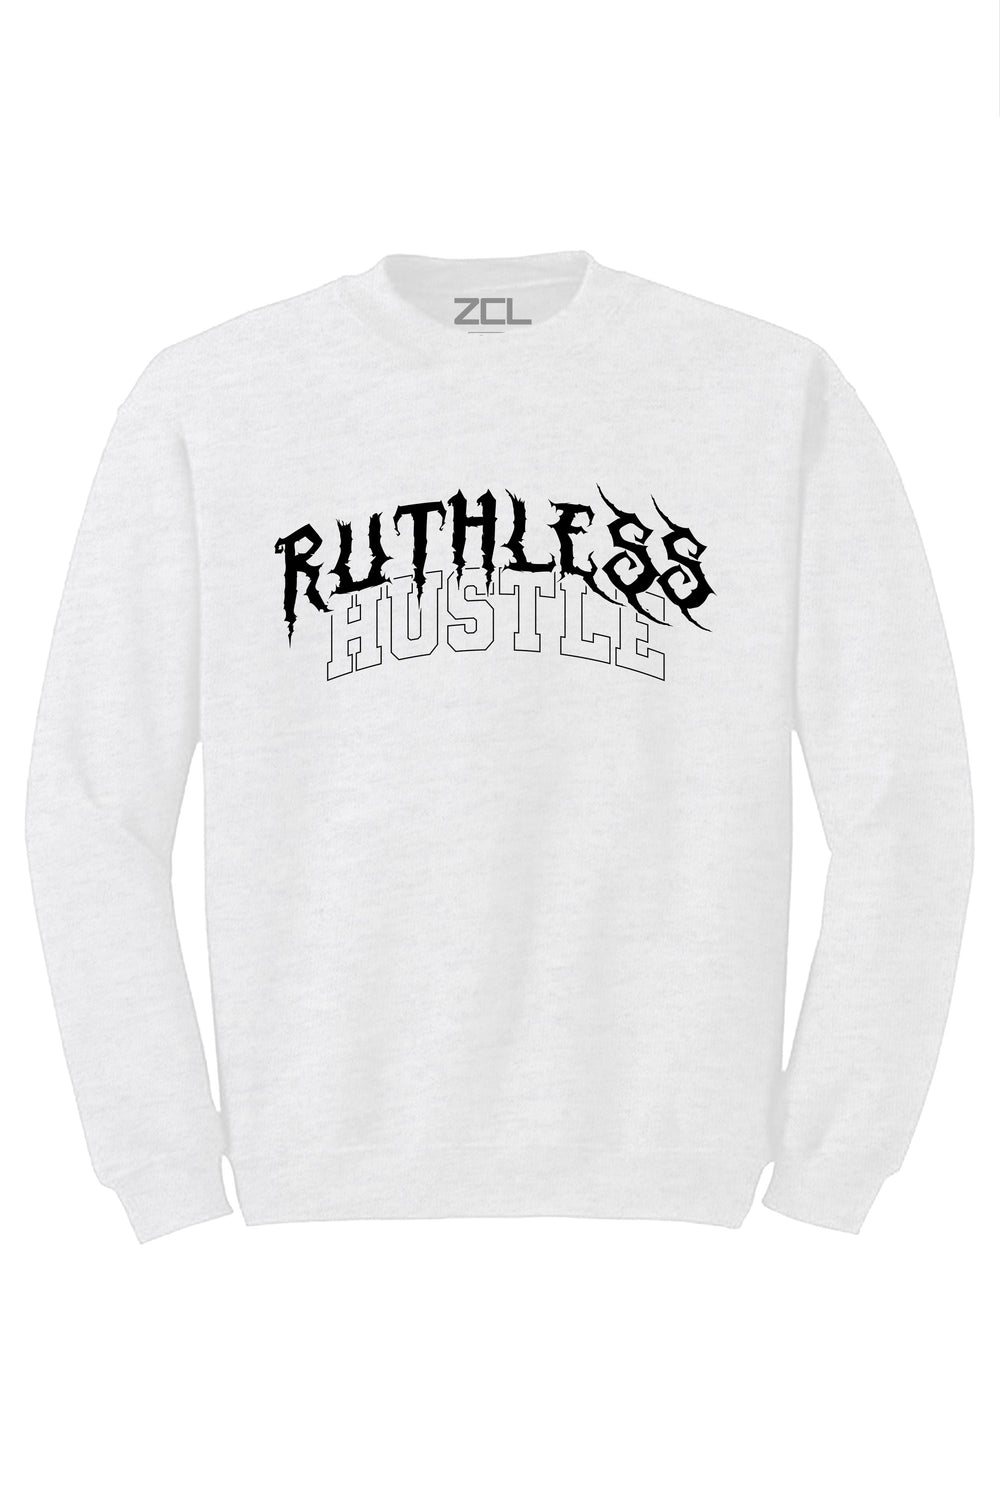 Ruthless Hustle Crewneck Sweatshirt (Black Logo) - Zamage